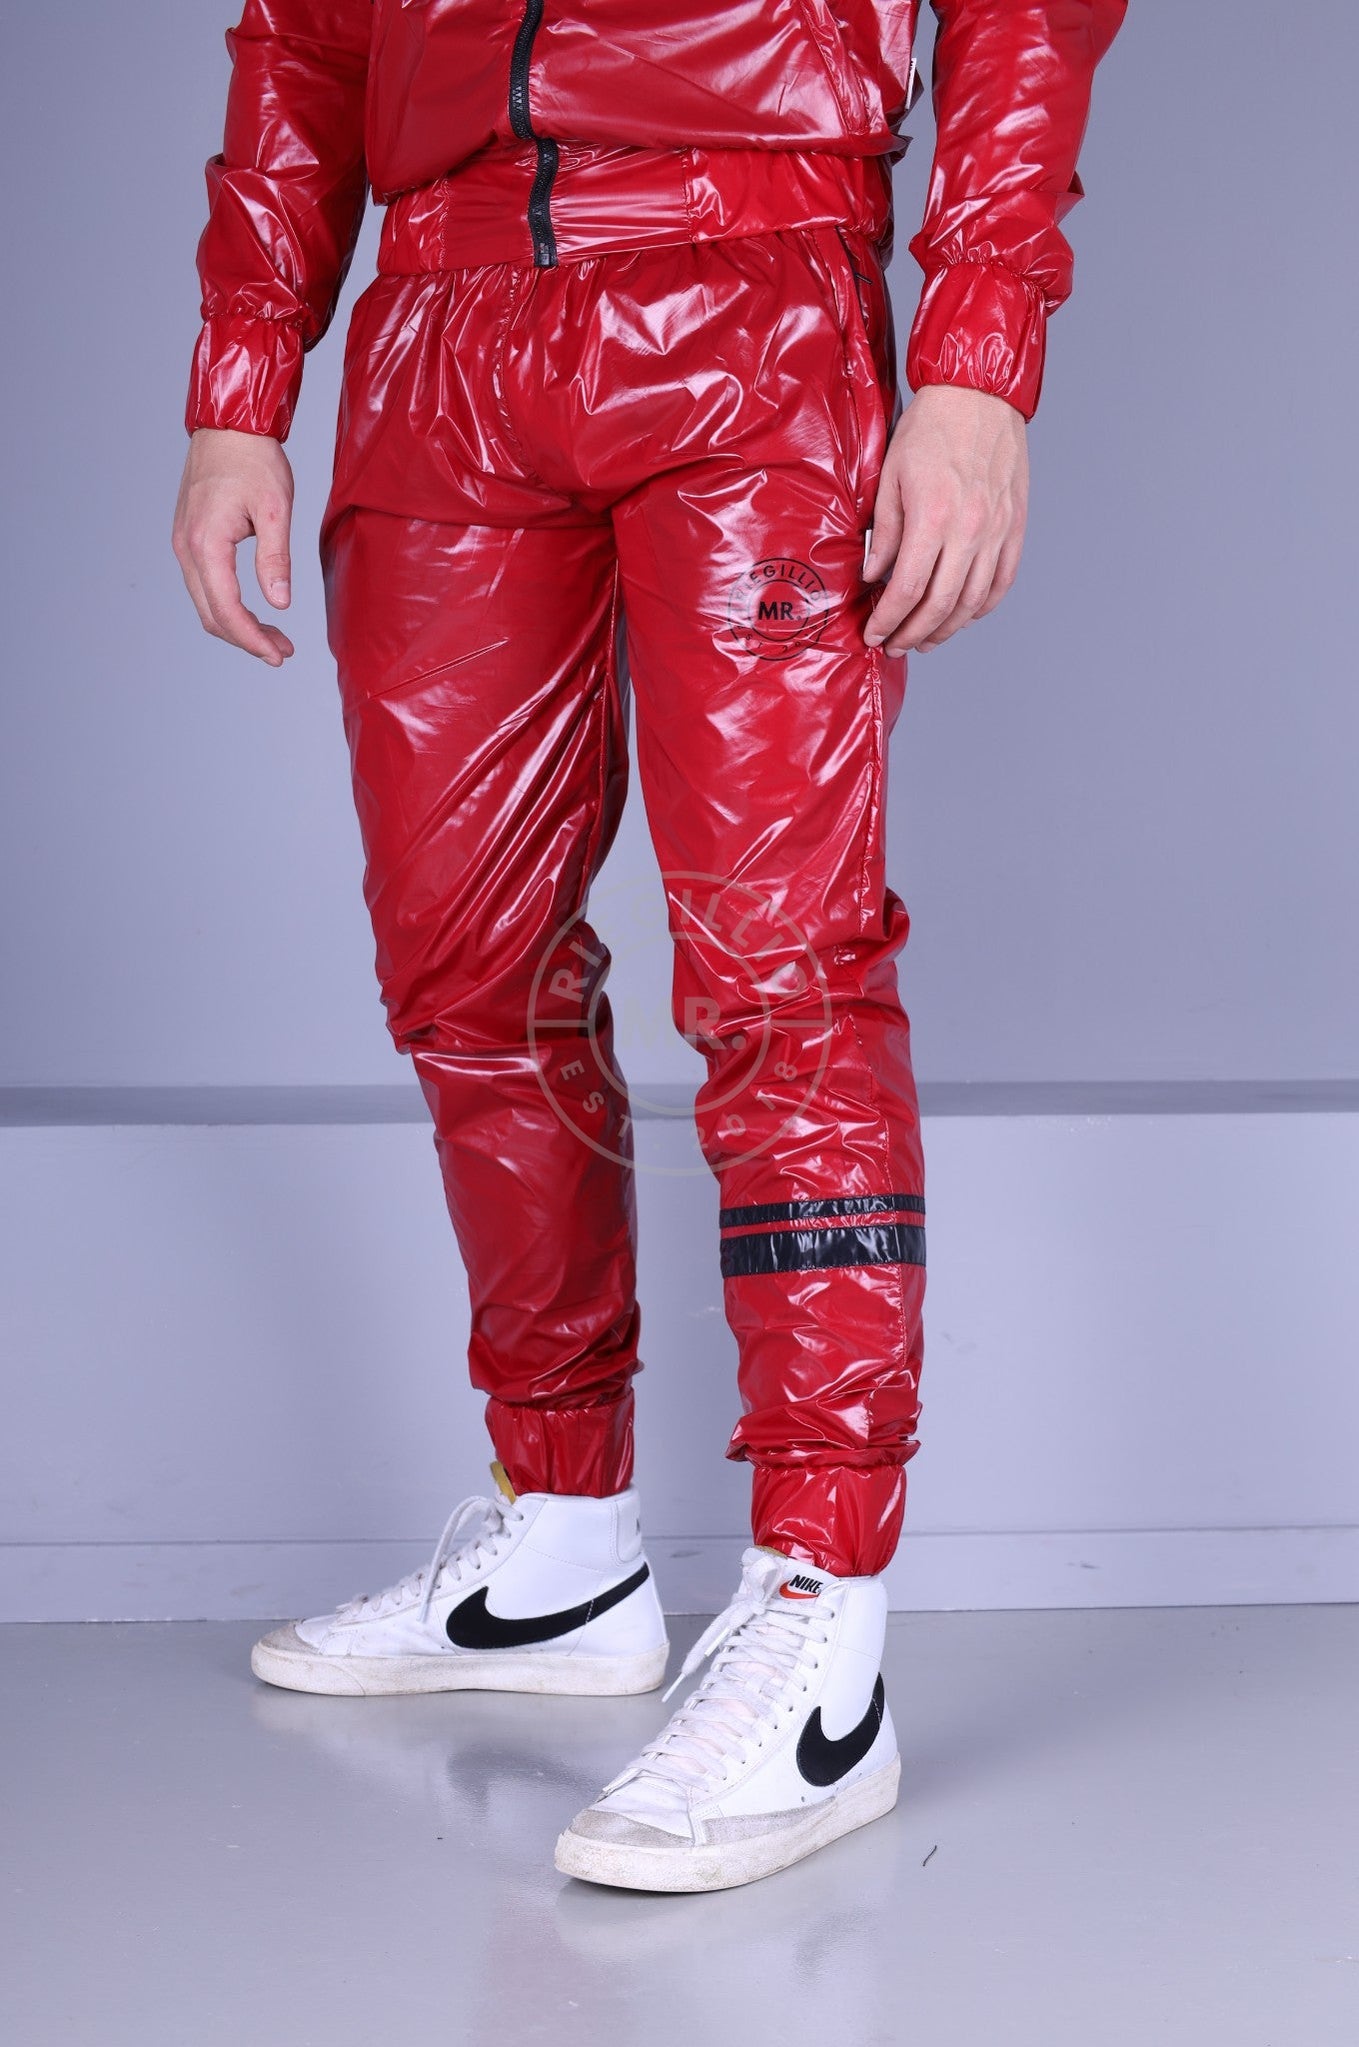 Shiny Nylon Tracksuit Pants - Red at MR. Riegillio